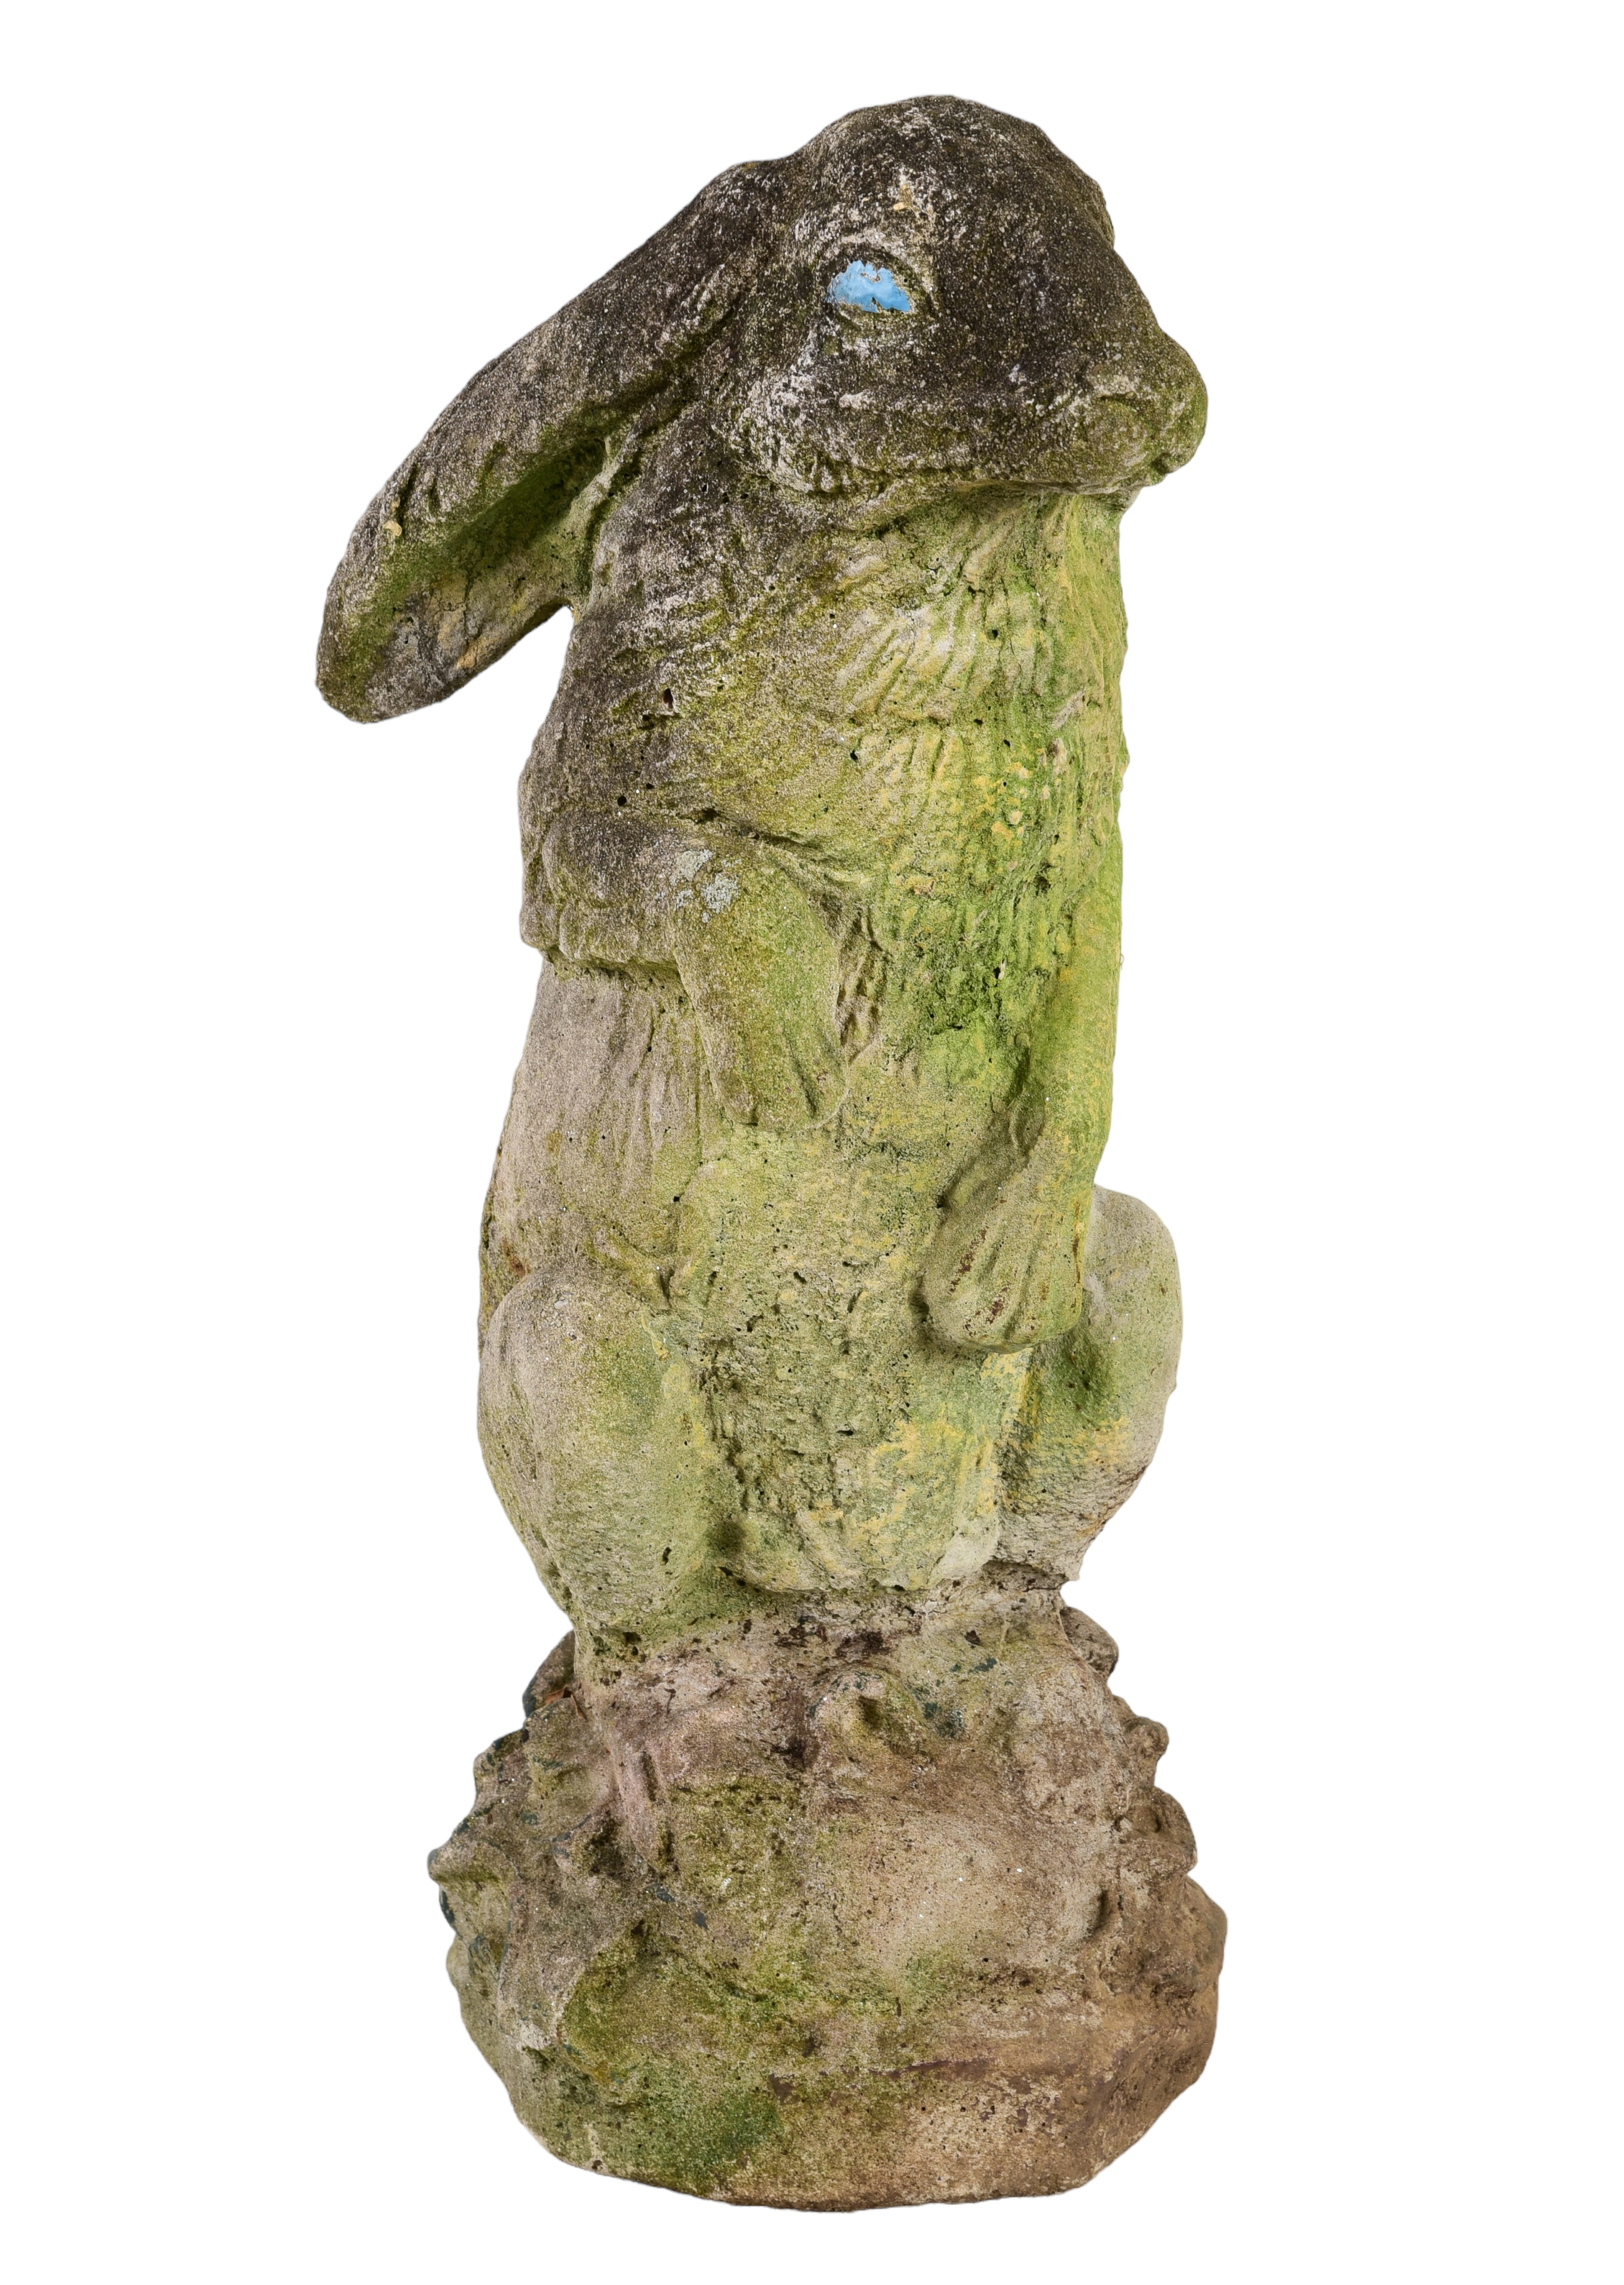 Cement garden statue of rabbit